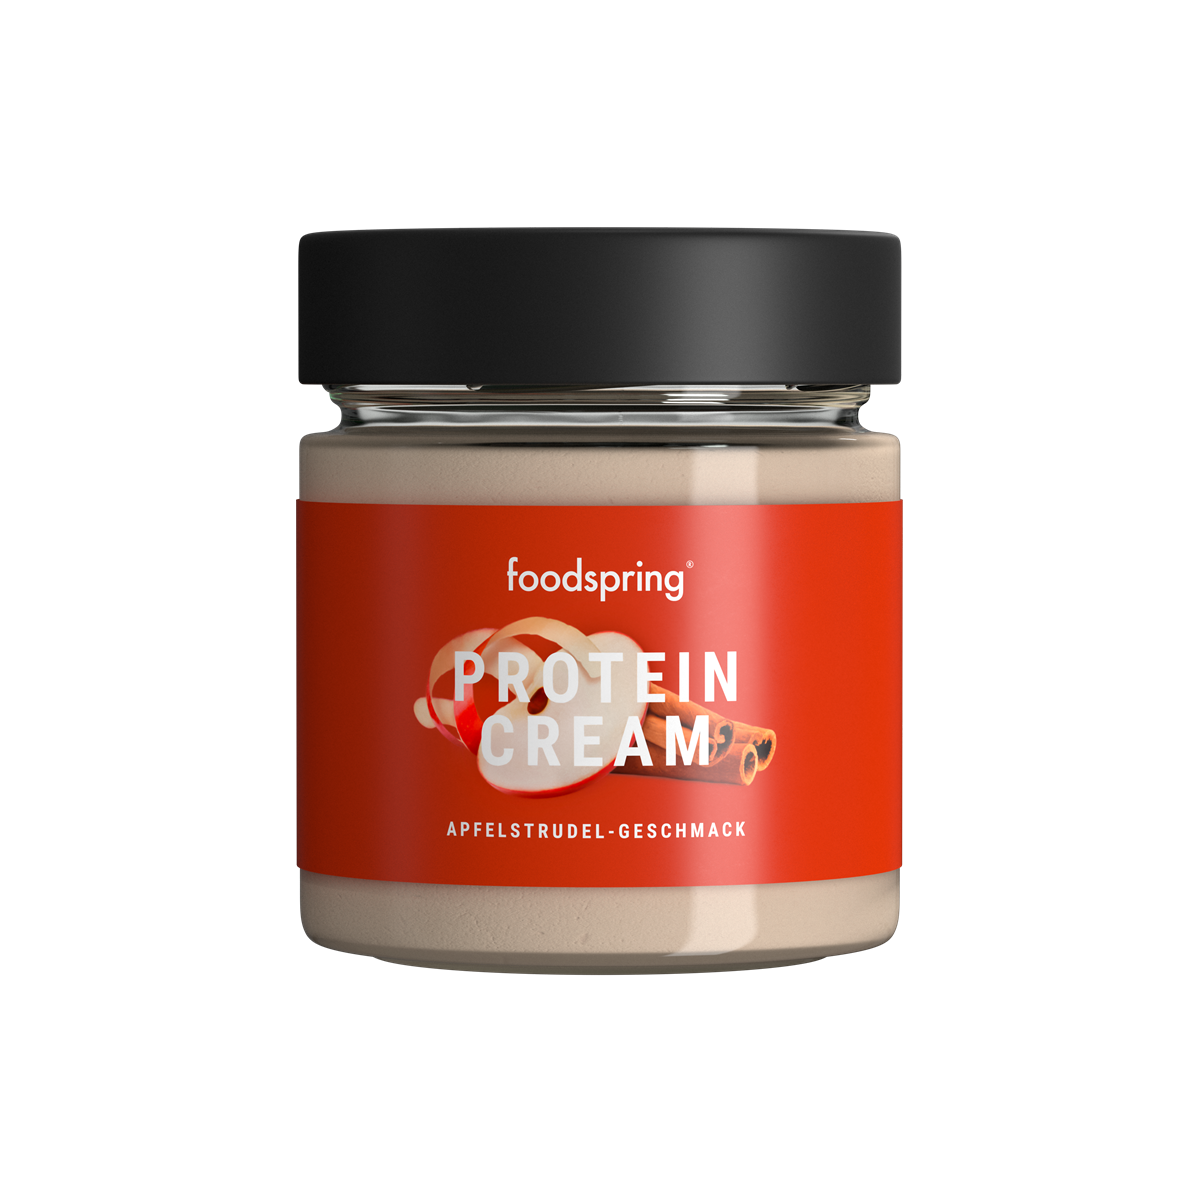 foodspring_Protein Cream_Apfelstrudel_EUR 4,99